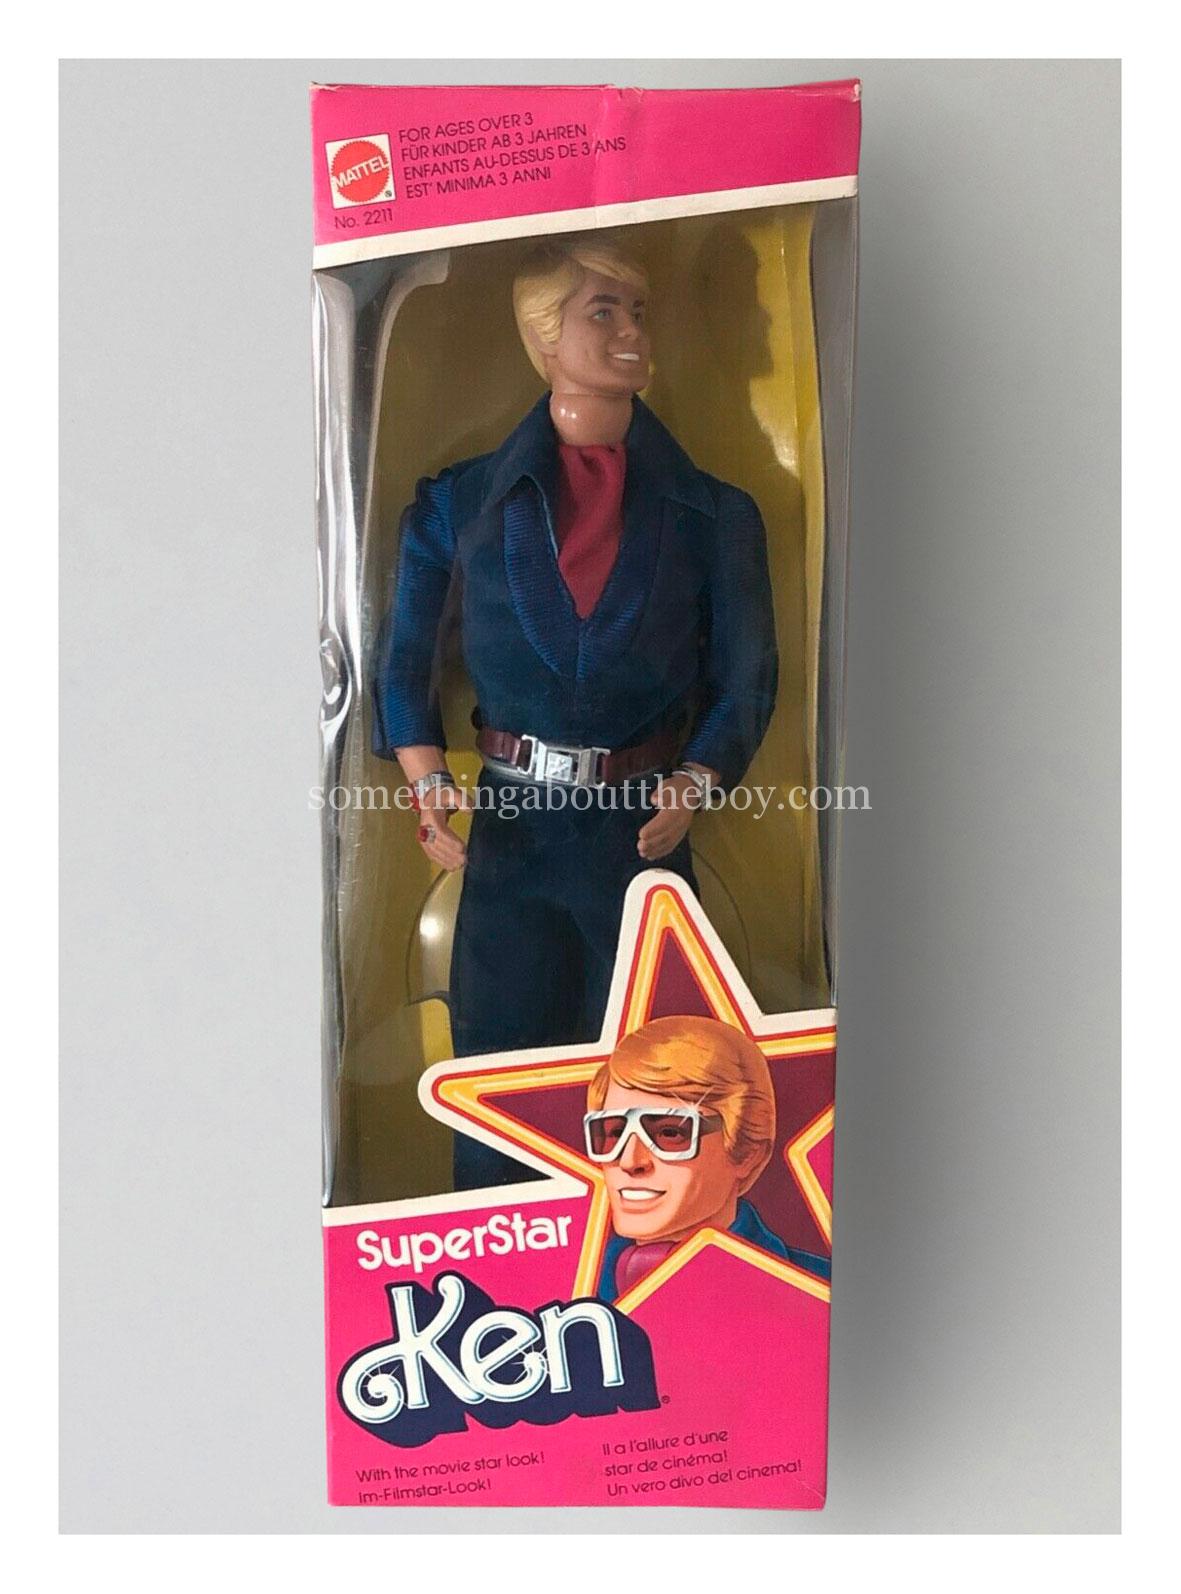 1978 #2211 SuperStar Ken in European packaging